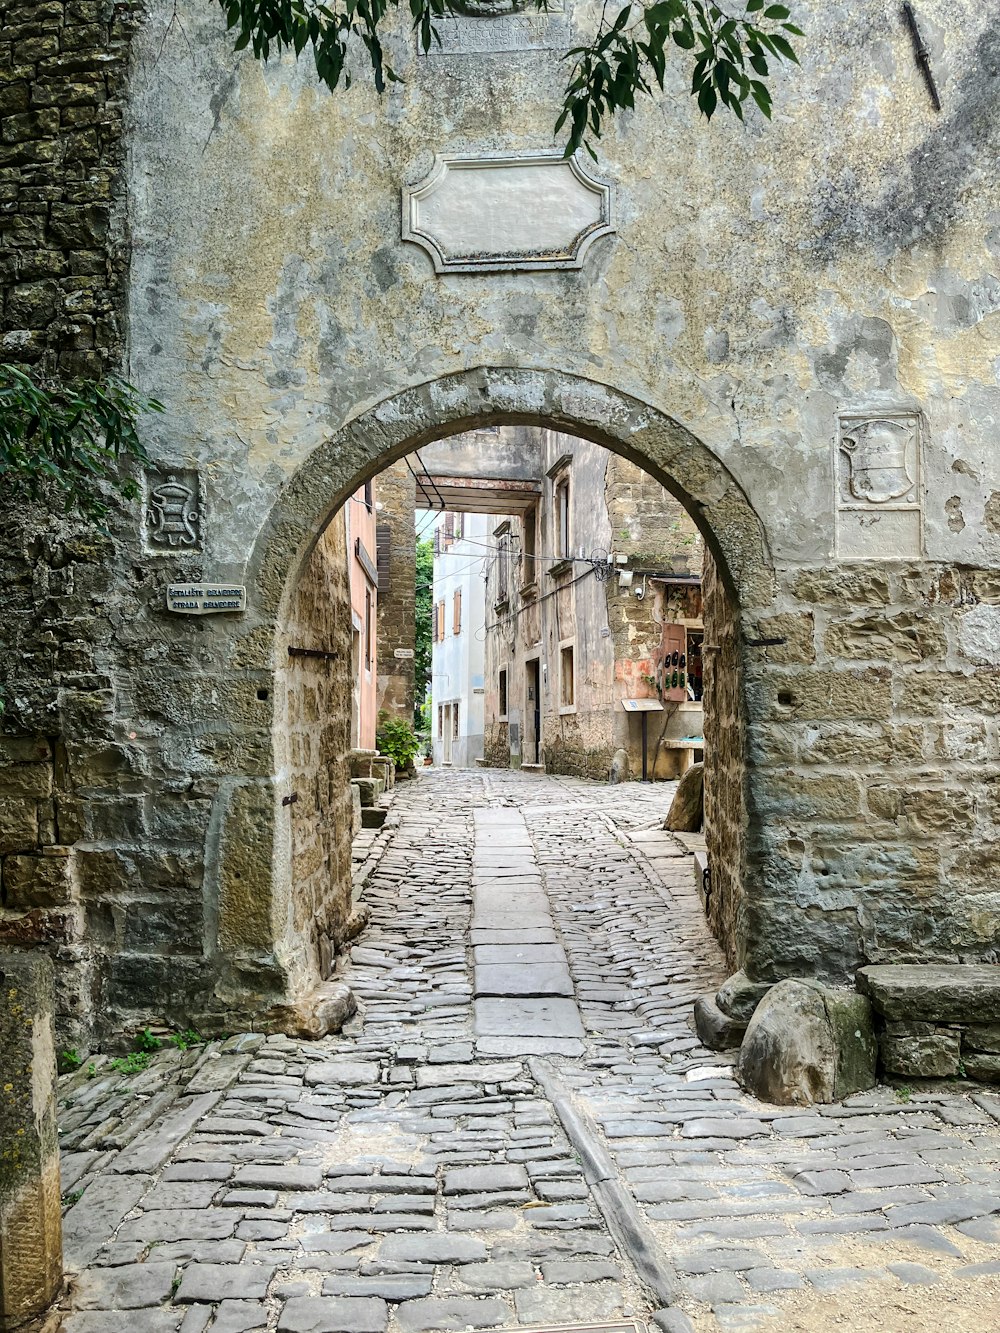 a narrow cobblestone street with a stone archway